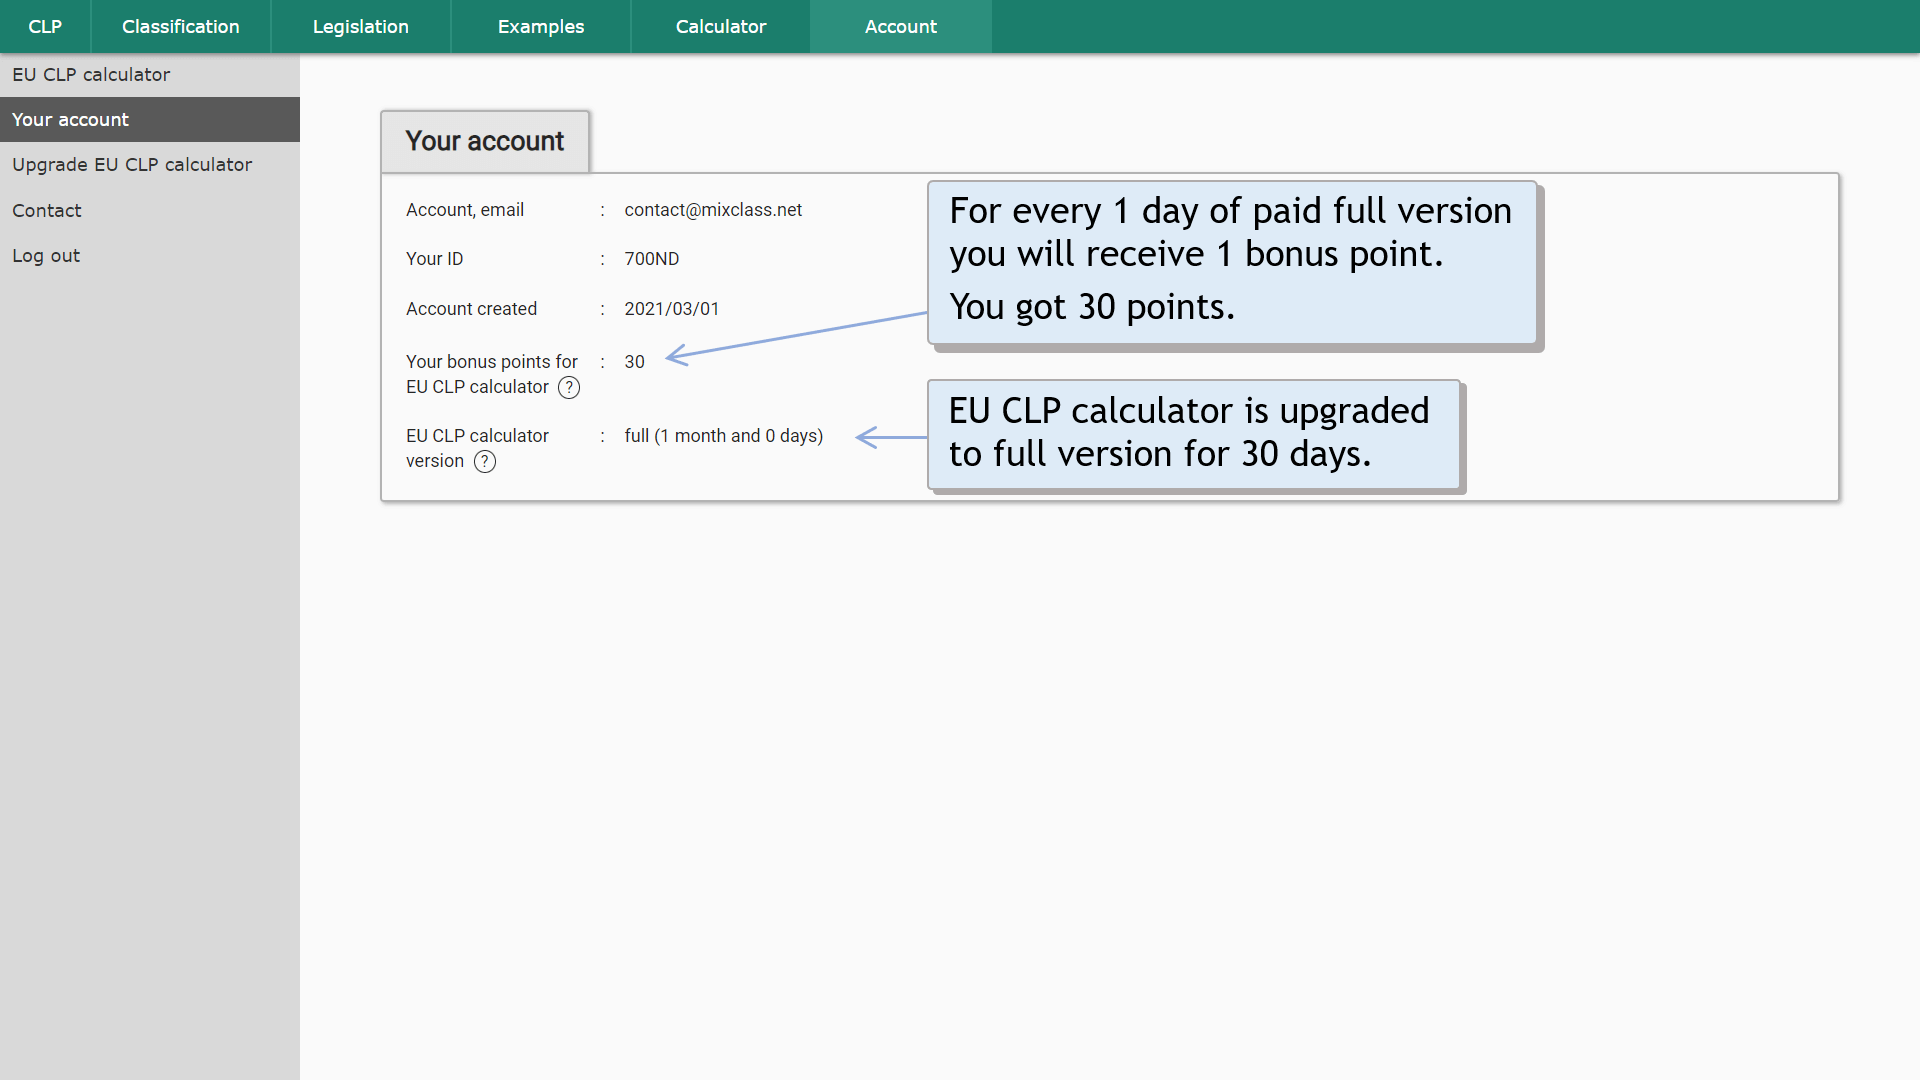 Upgrade EU CLP calculator